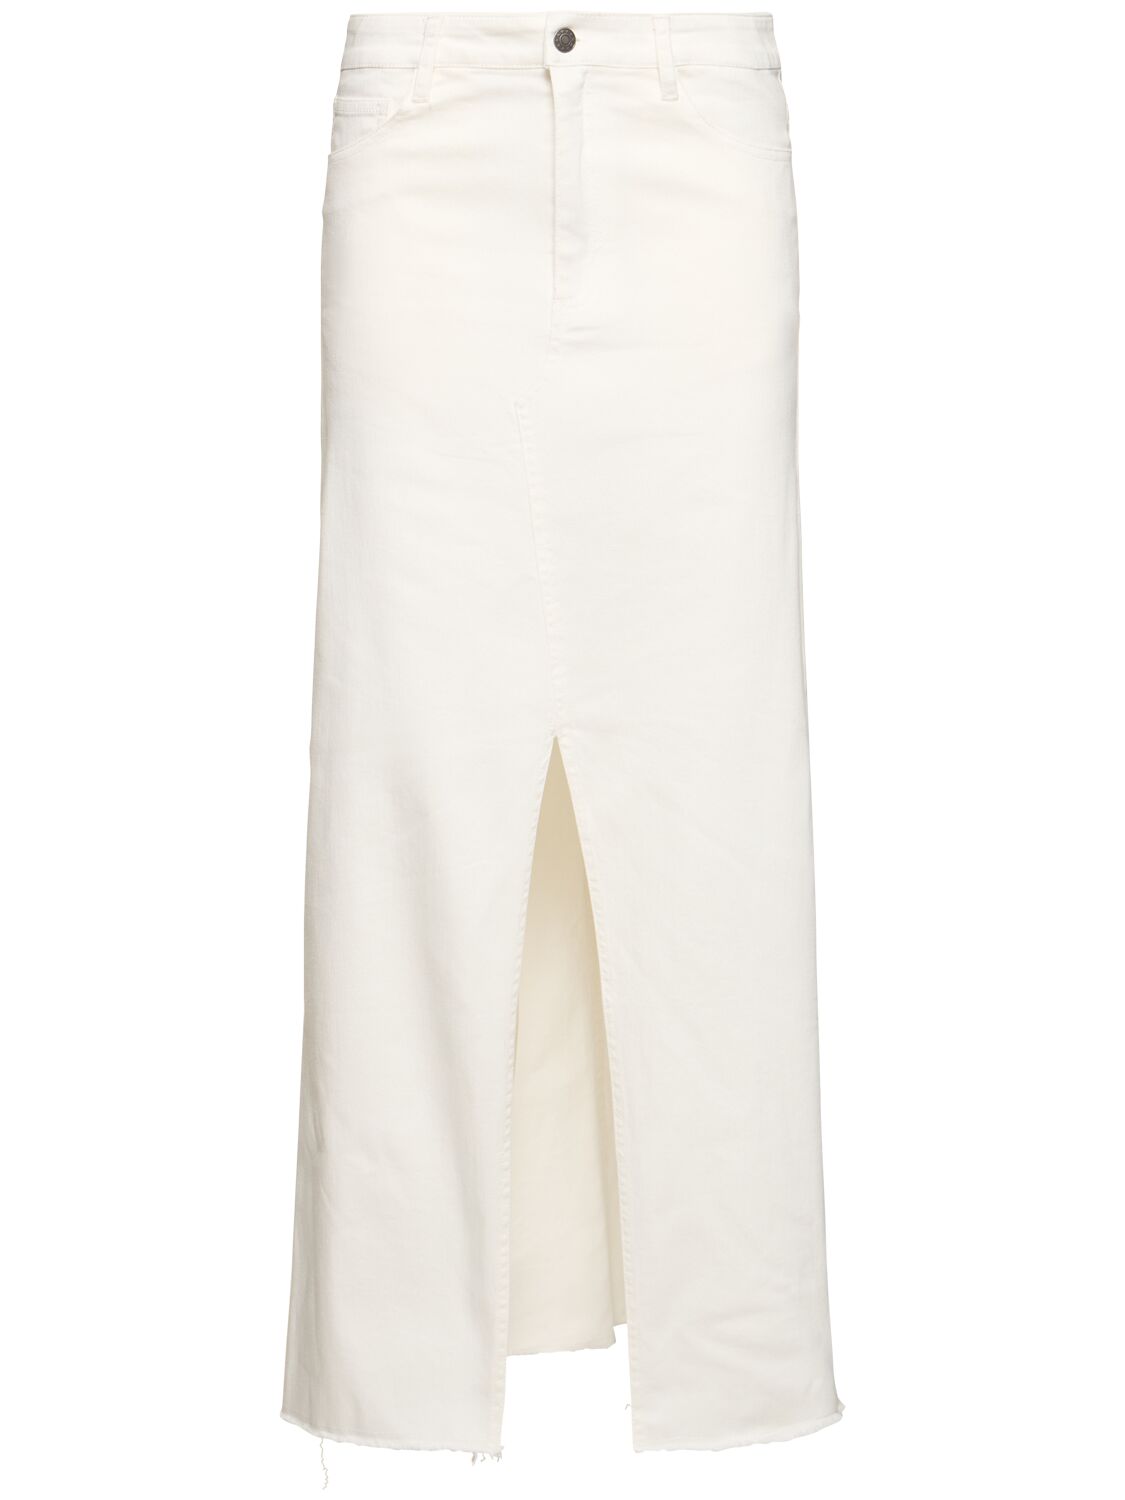 Image of Bennet Cotton Blend Long Skirt